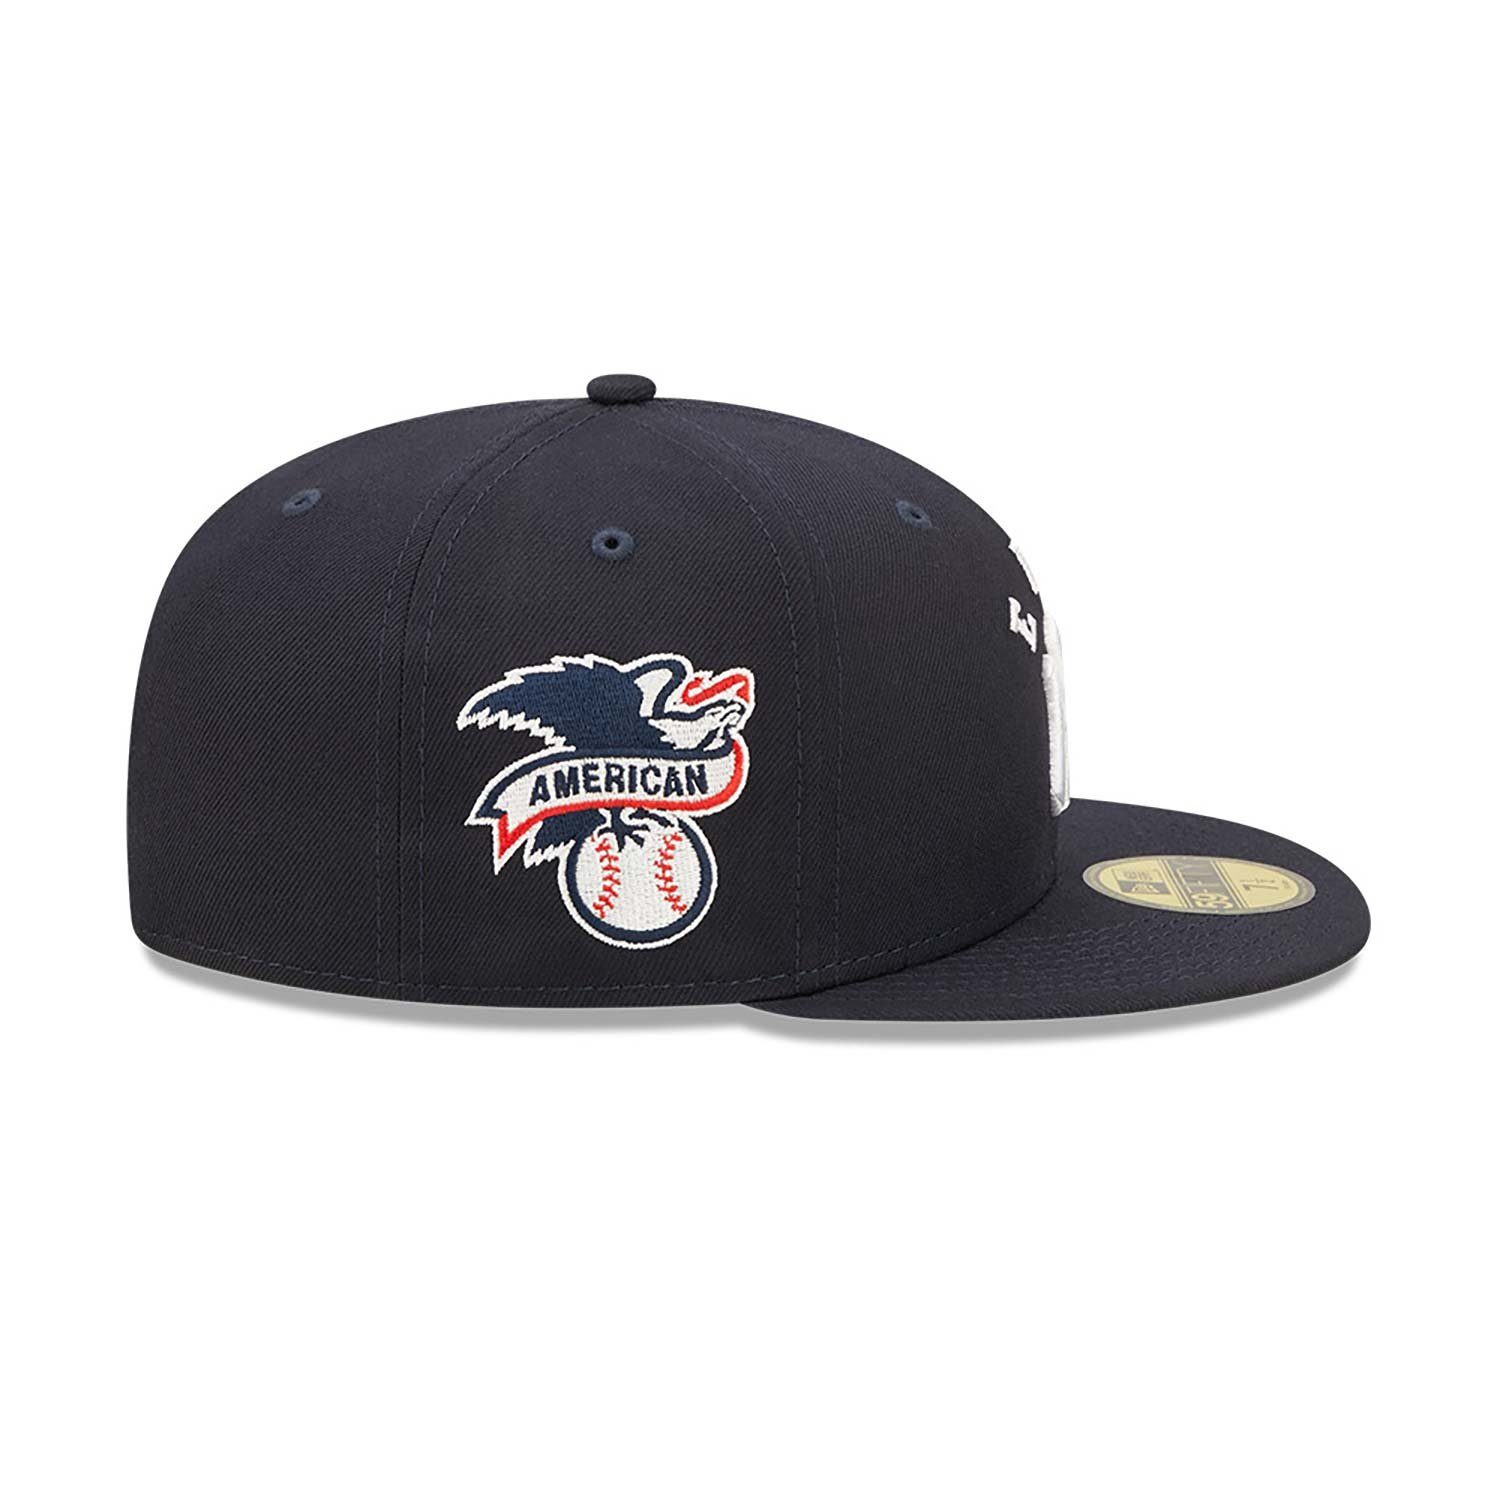 Yankees Baseball Cap 59Fifty Team New (1-St) New Era Era New League Cap York